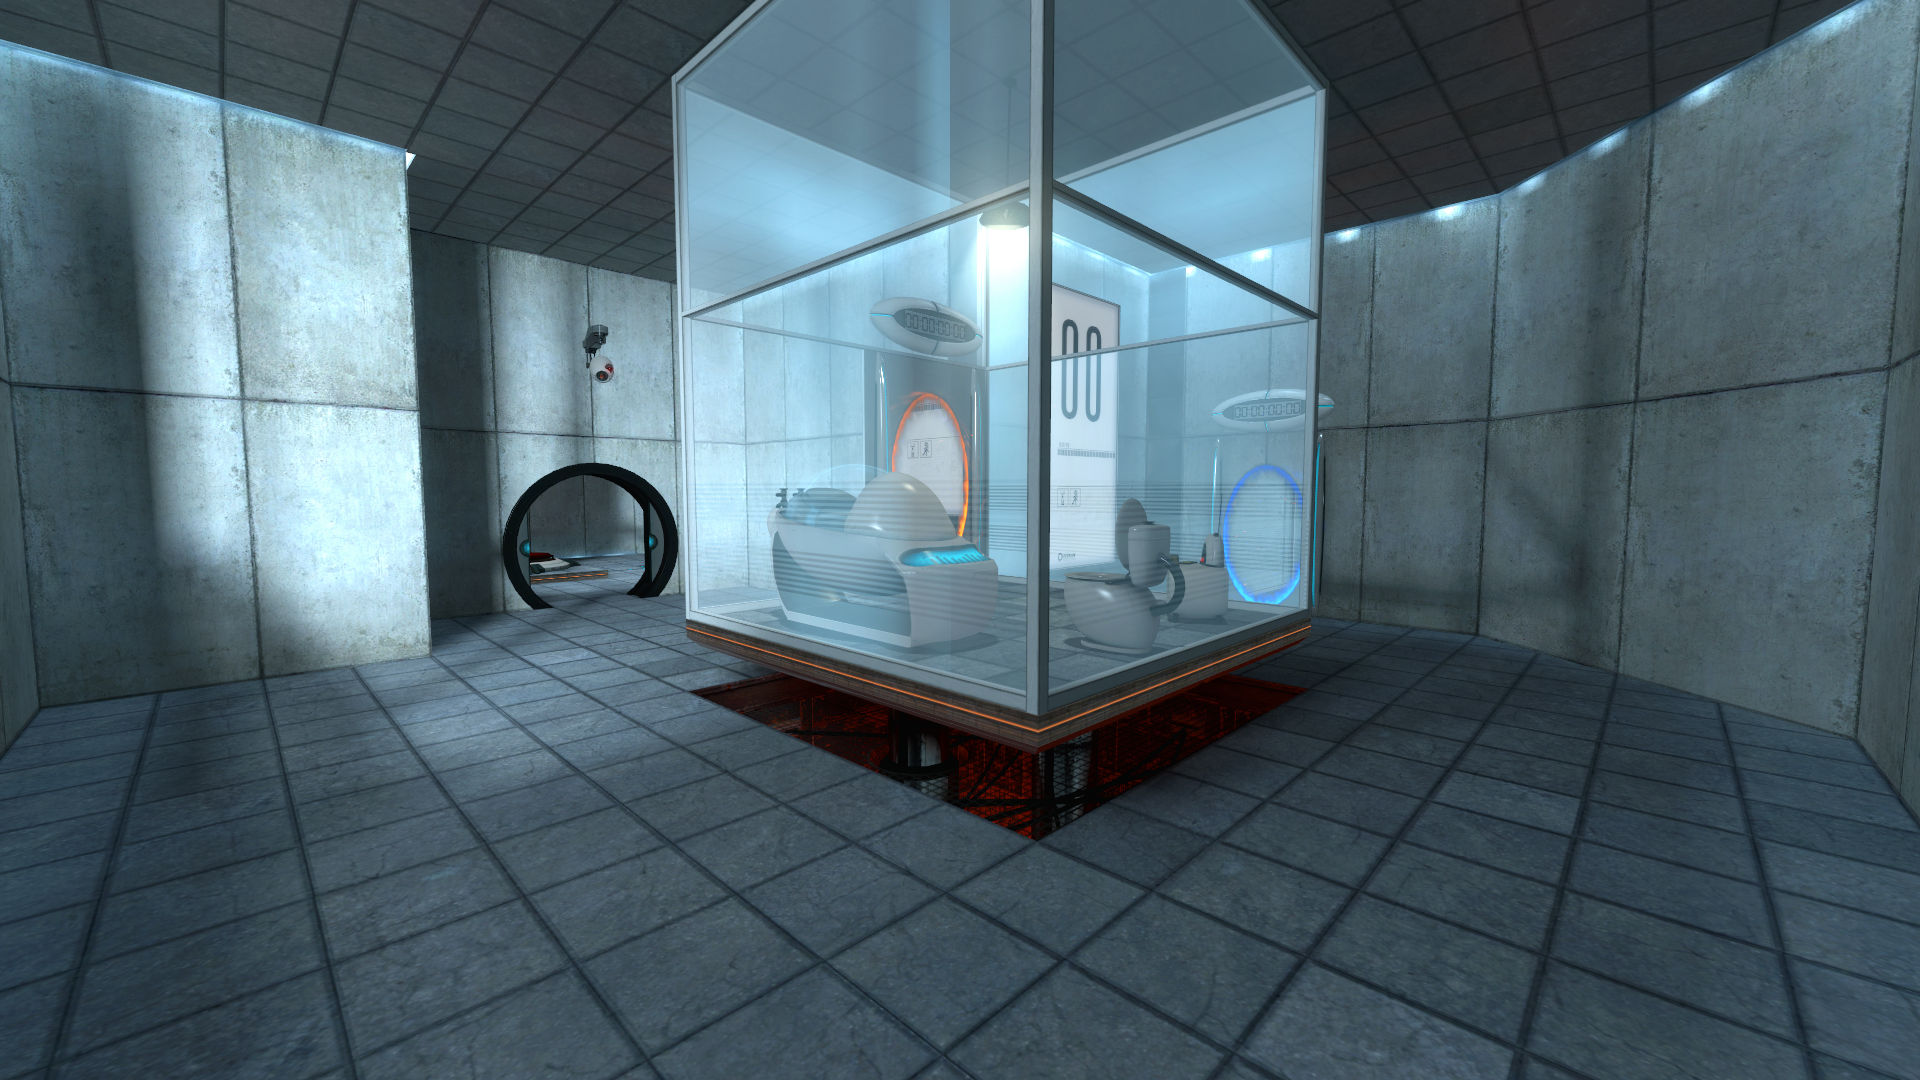 Камеры портал 1. Portal 2 комната в начале. Portal 2 тестовая камера 1. Portal 1 и Portal 2. Test Chamber 00 Portal 2.